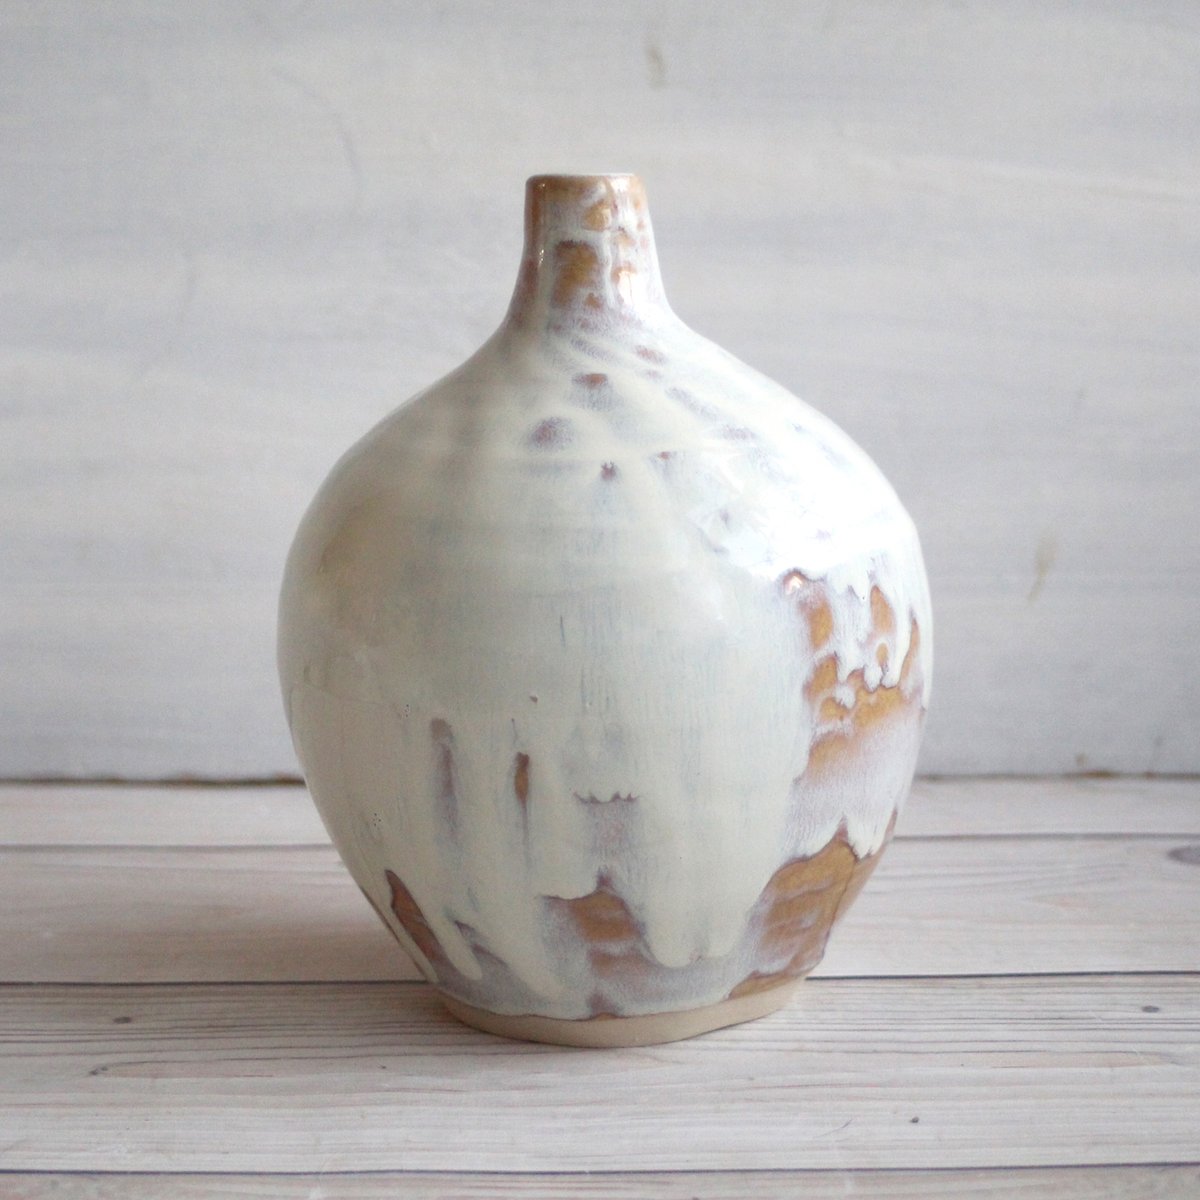 Andover Pottery — Round Ceramic Vase in White and Ocher Glaze Handmade